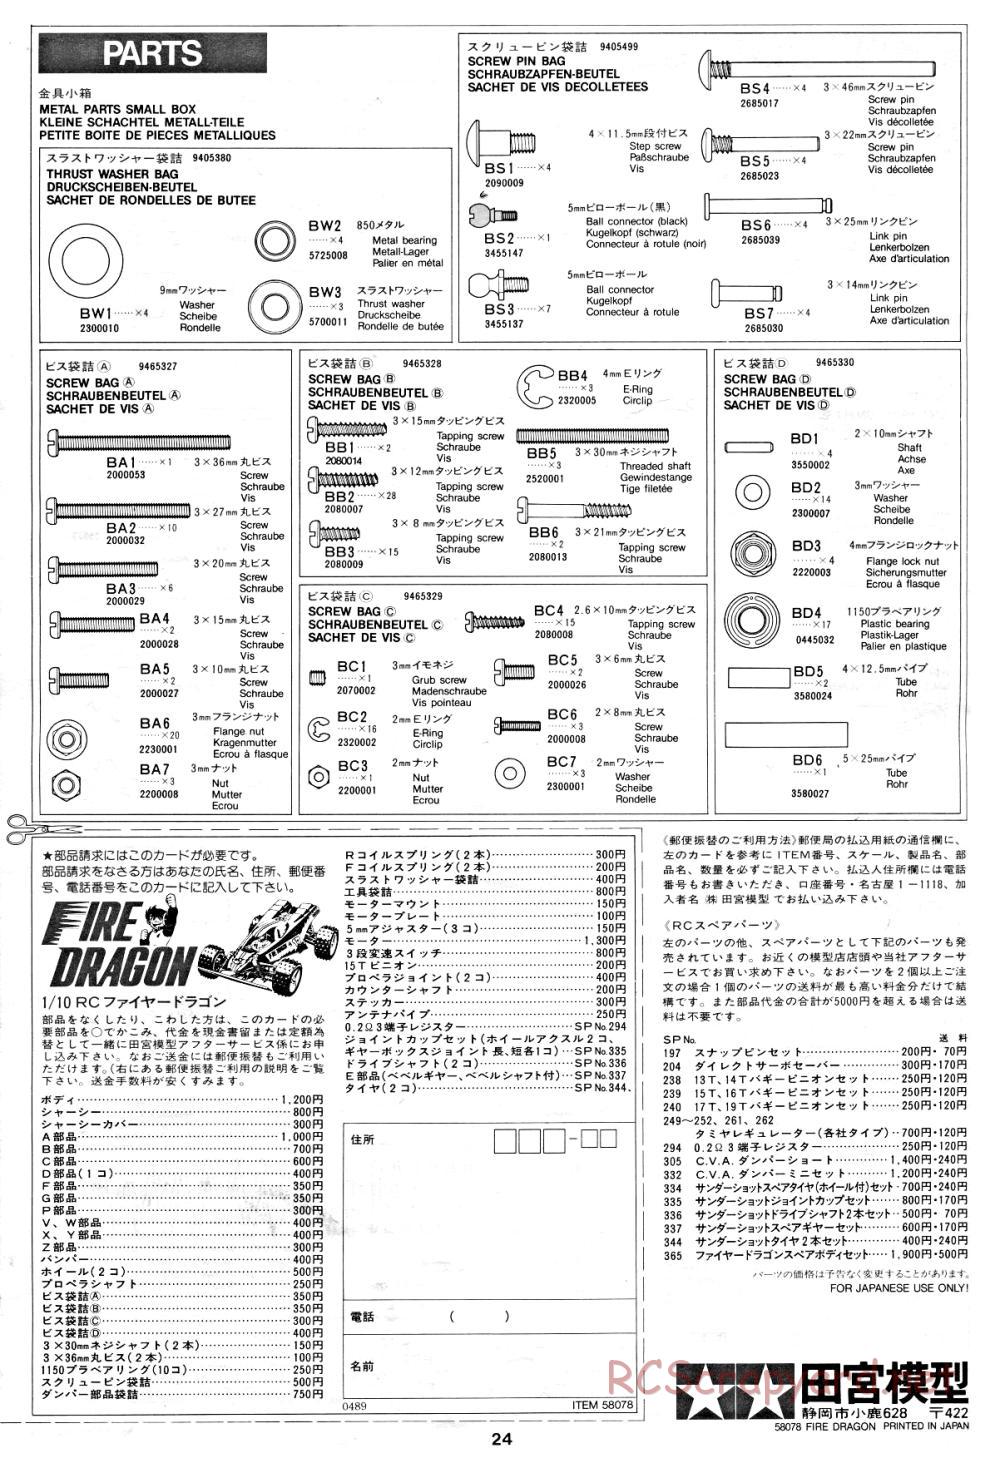 Tamiya - Fire Dragon - 58078 - Manual - Page 24